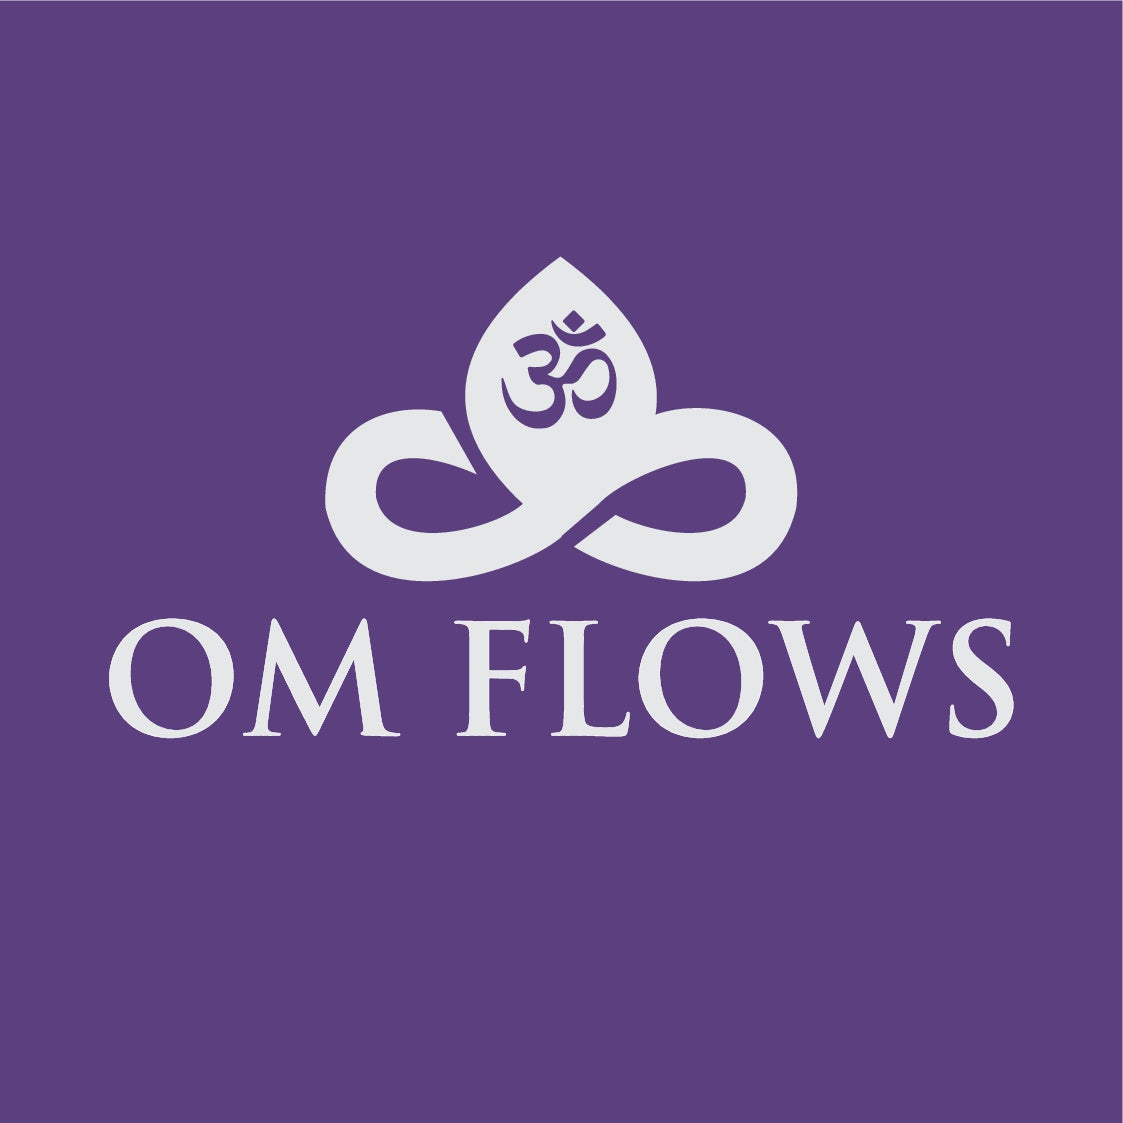 OM FLOWS – omflows